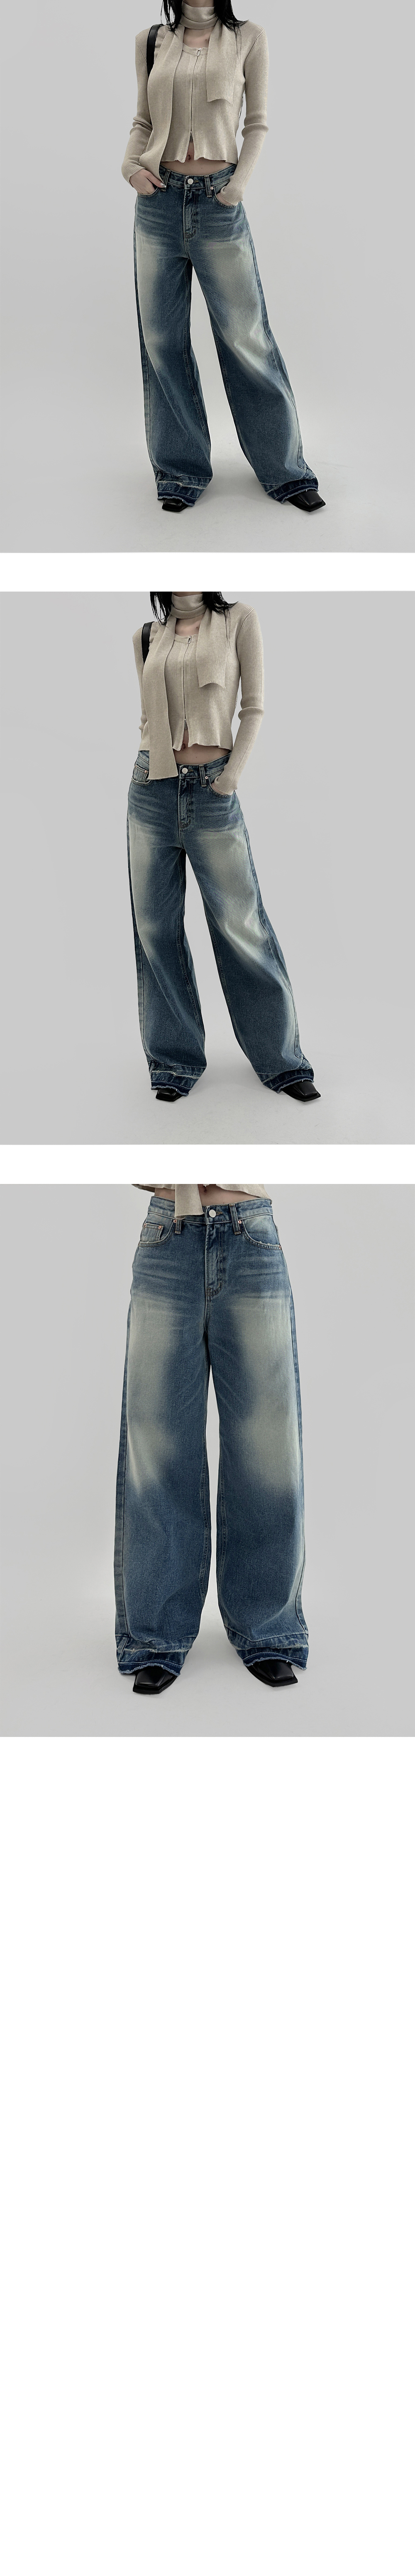 suspenders skirt/pants white color image-S1L8